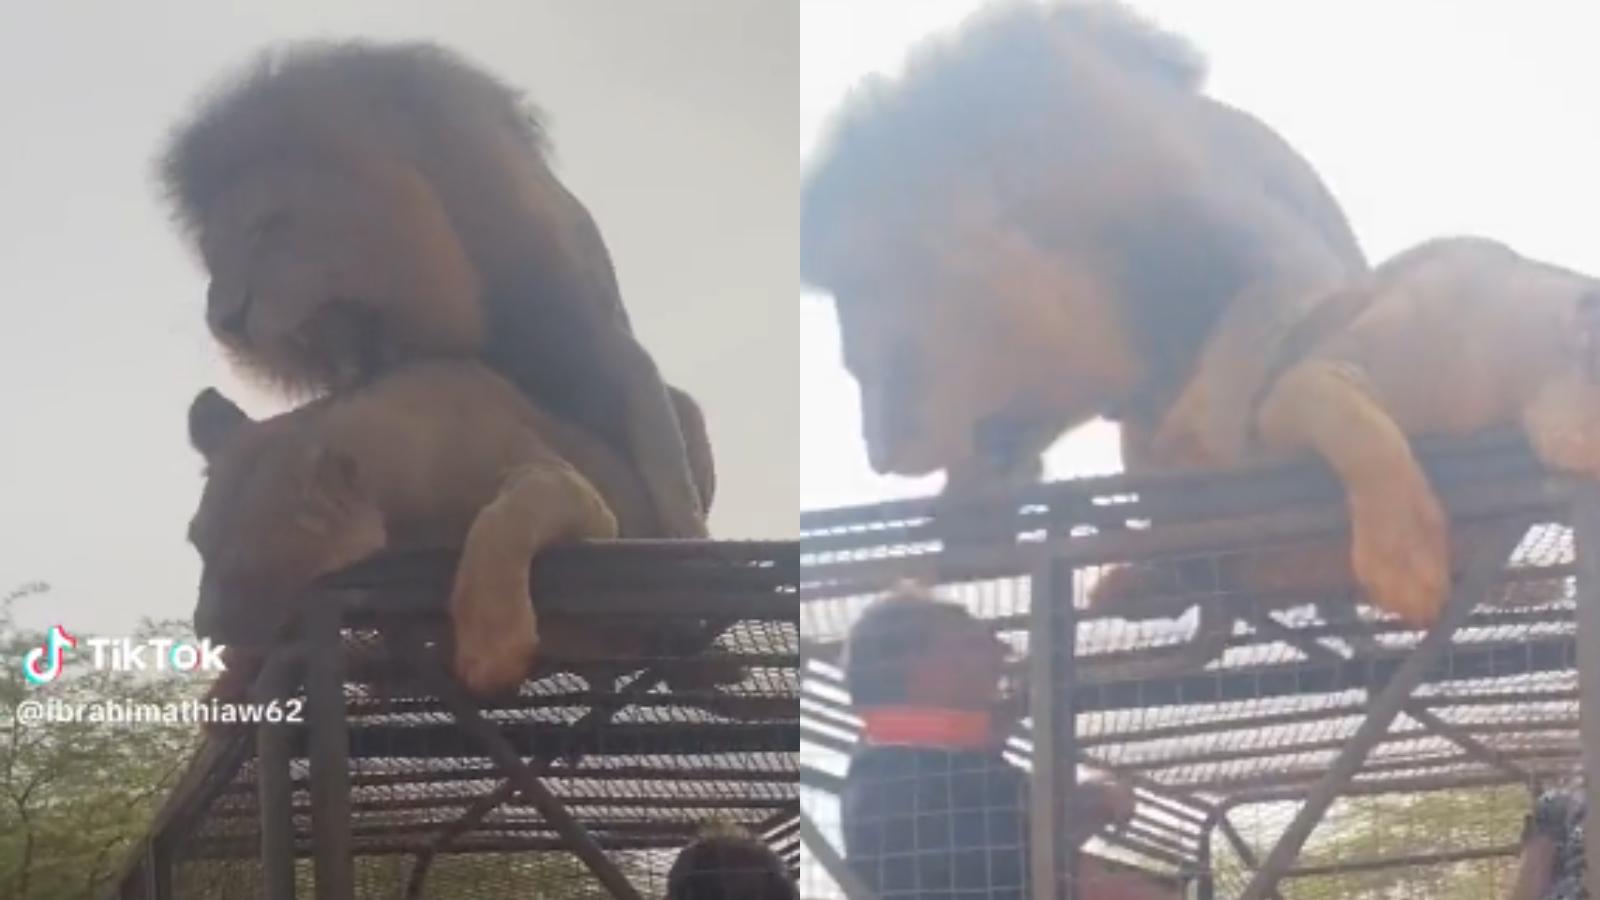 lions mating at zoo